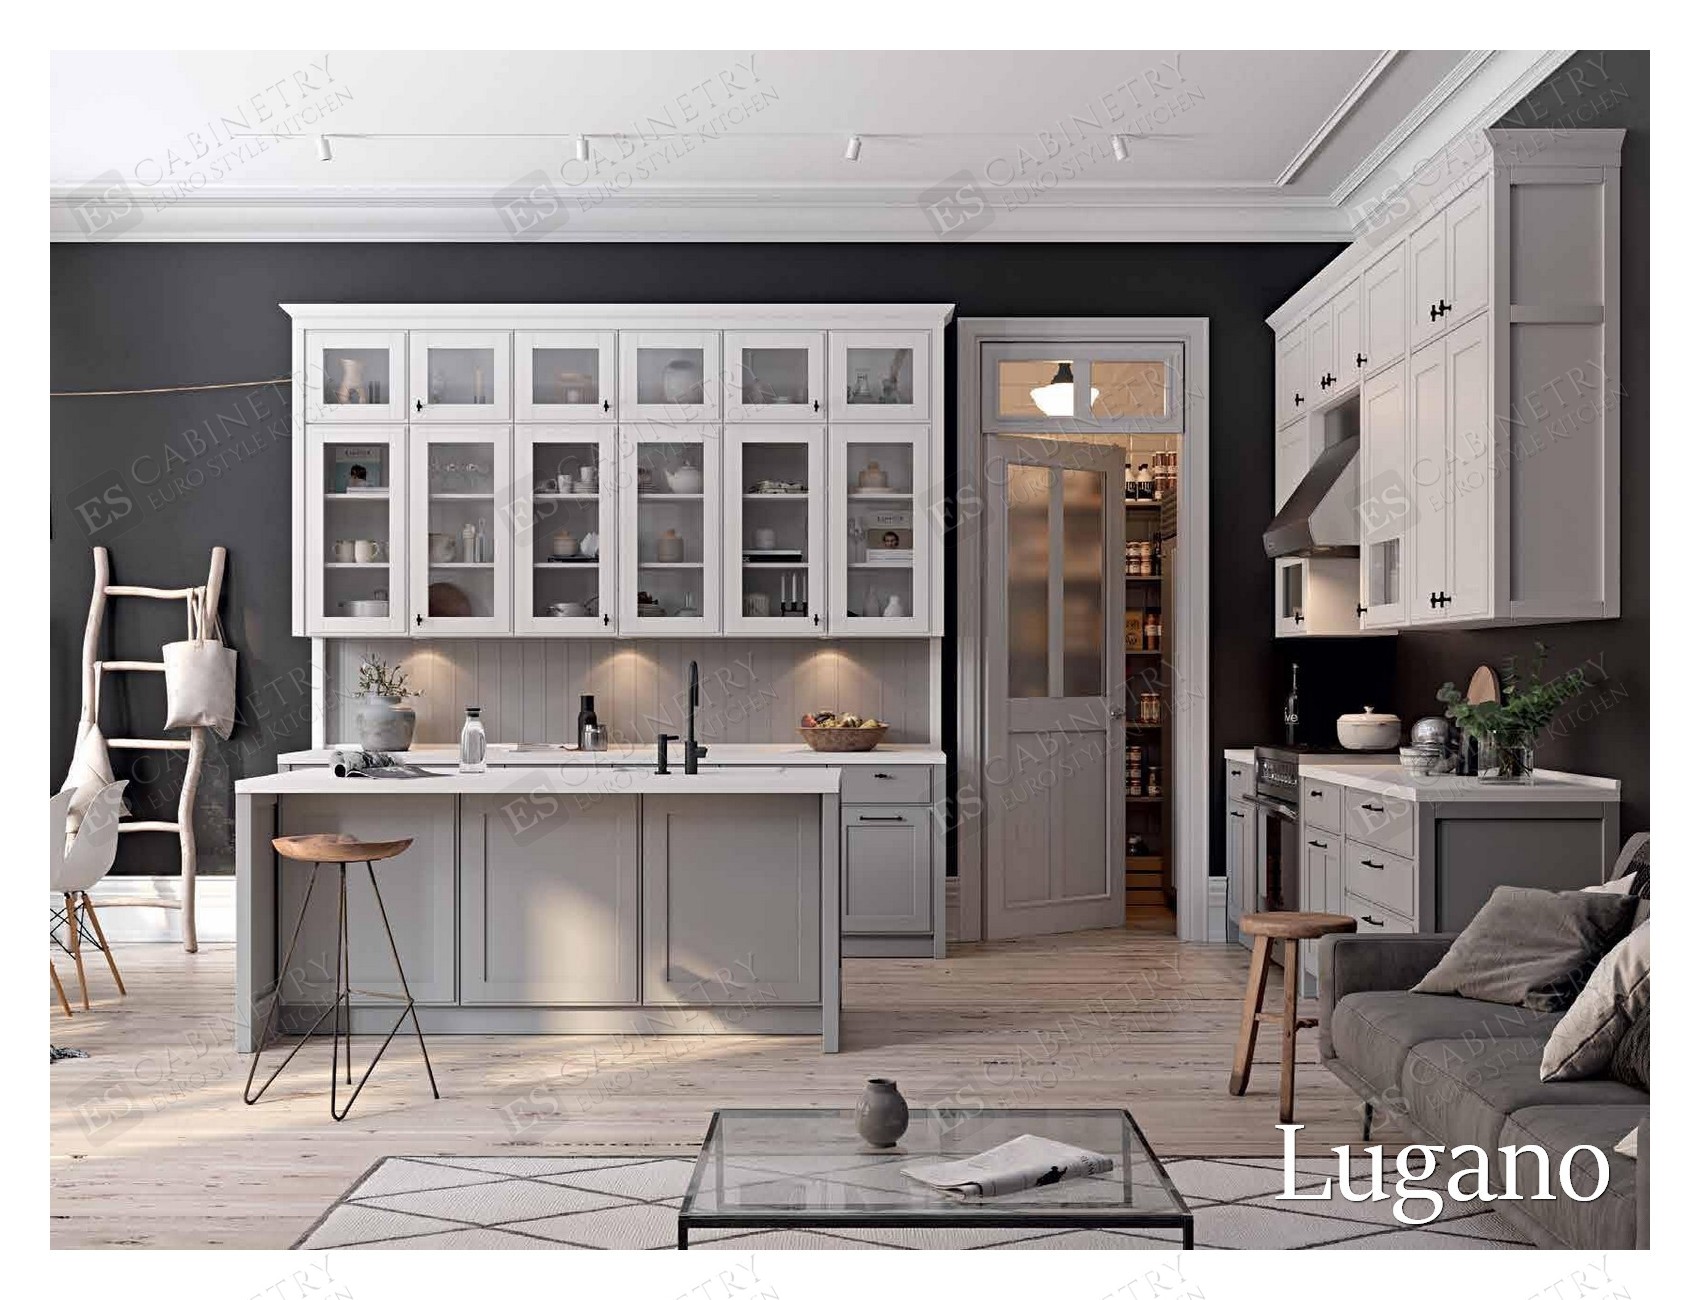 Lugano | Euro kitchen design